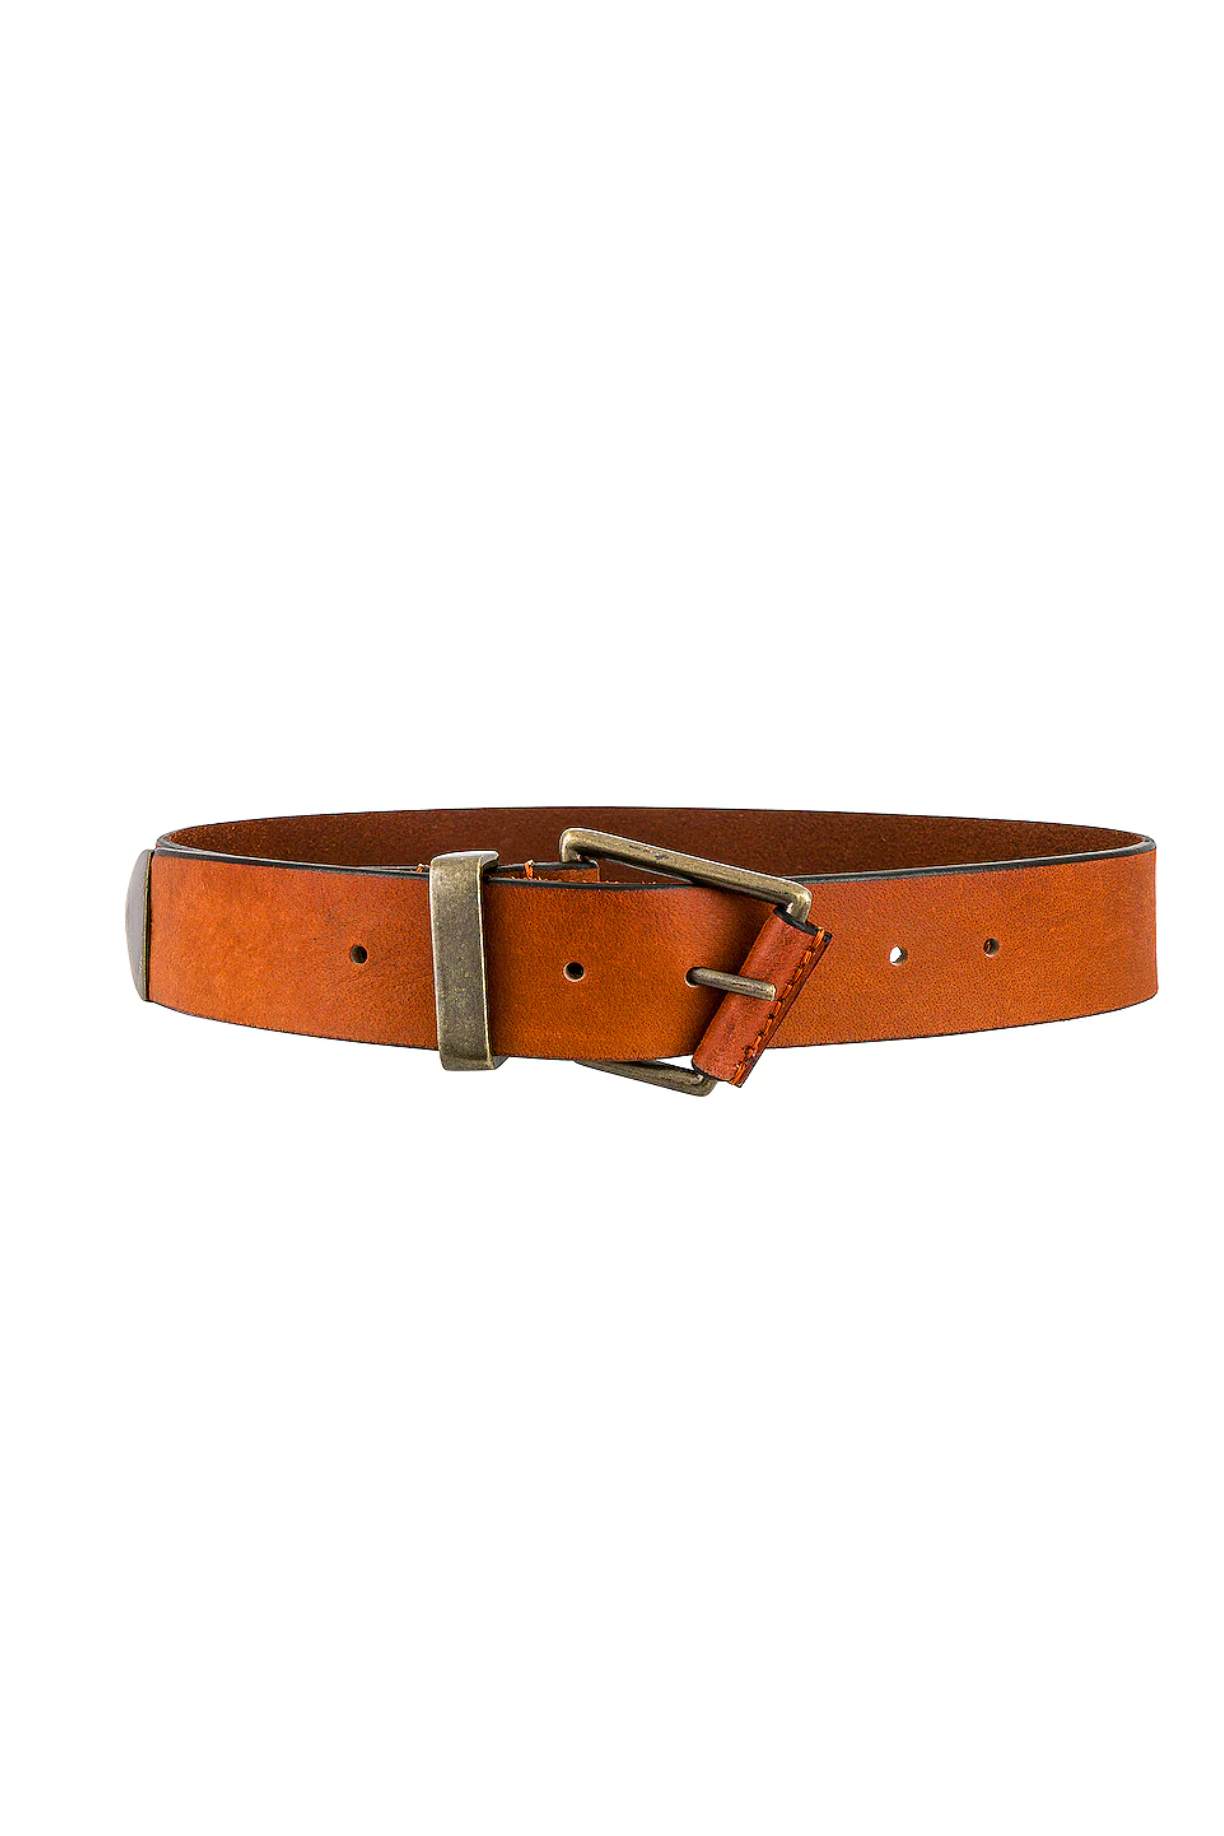 Free People Brown Leather Hastings Corset Belt Harness Medium / Large NWOT  $98 